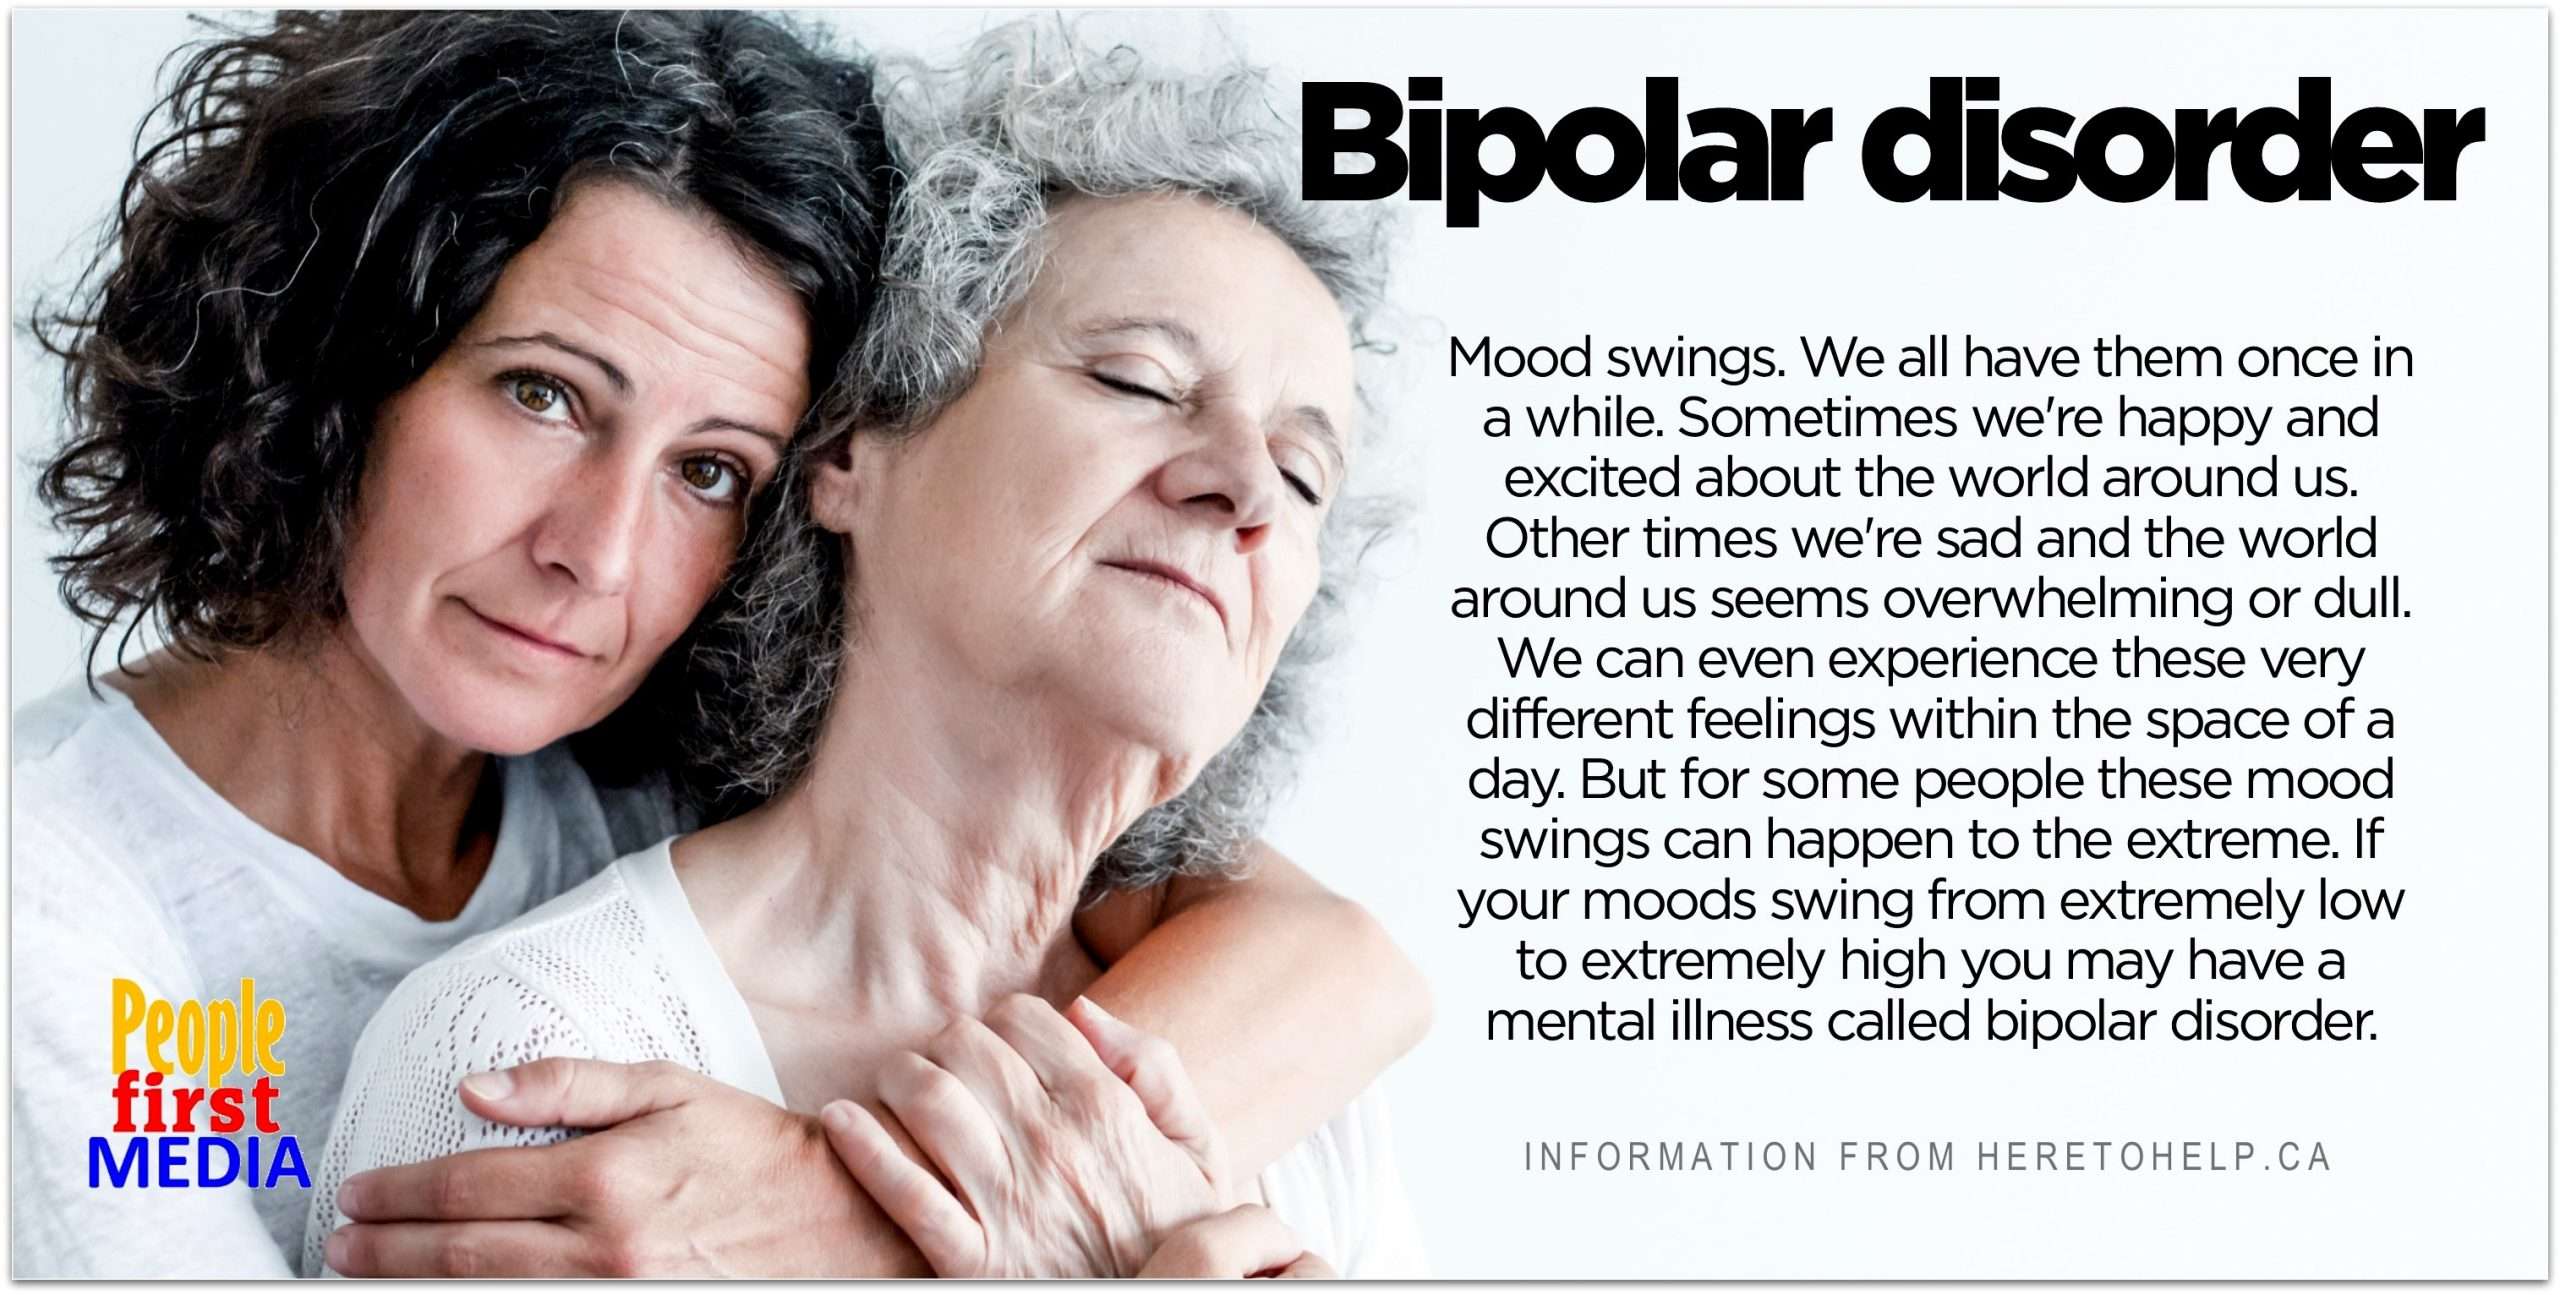 Information about bipolar disorder